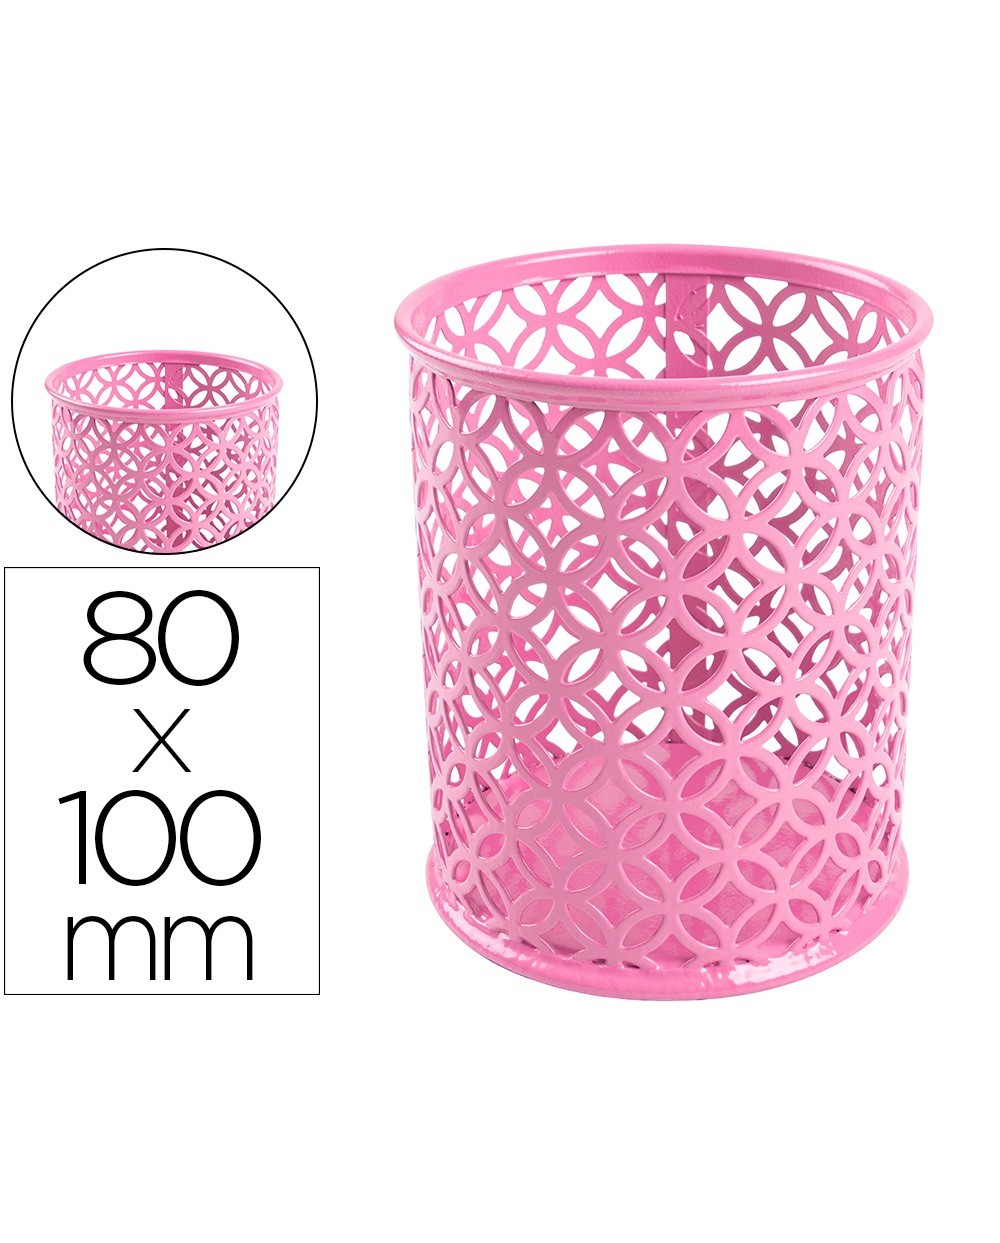 Cubilete portalapices q connect metal redondo rosa diametro 80 altura 100 mm